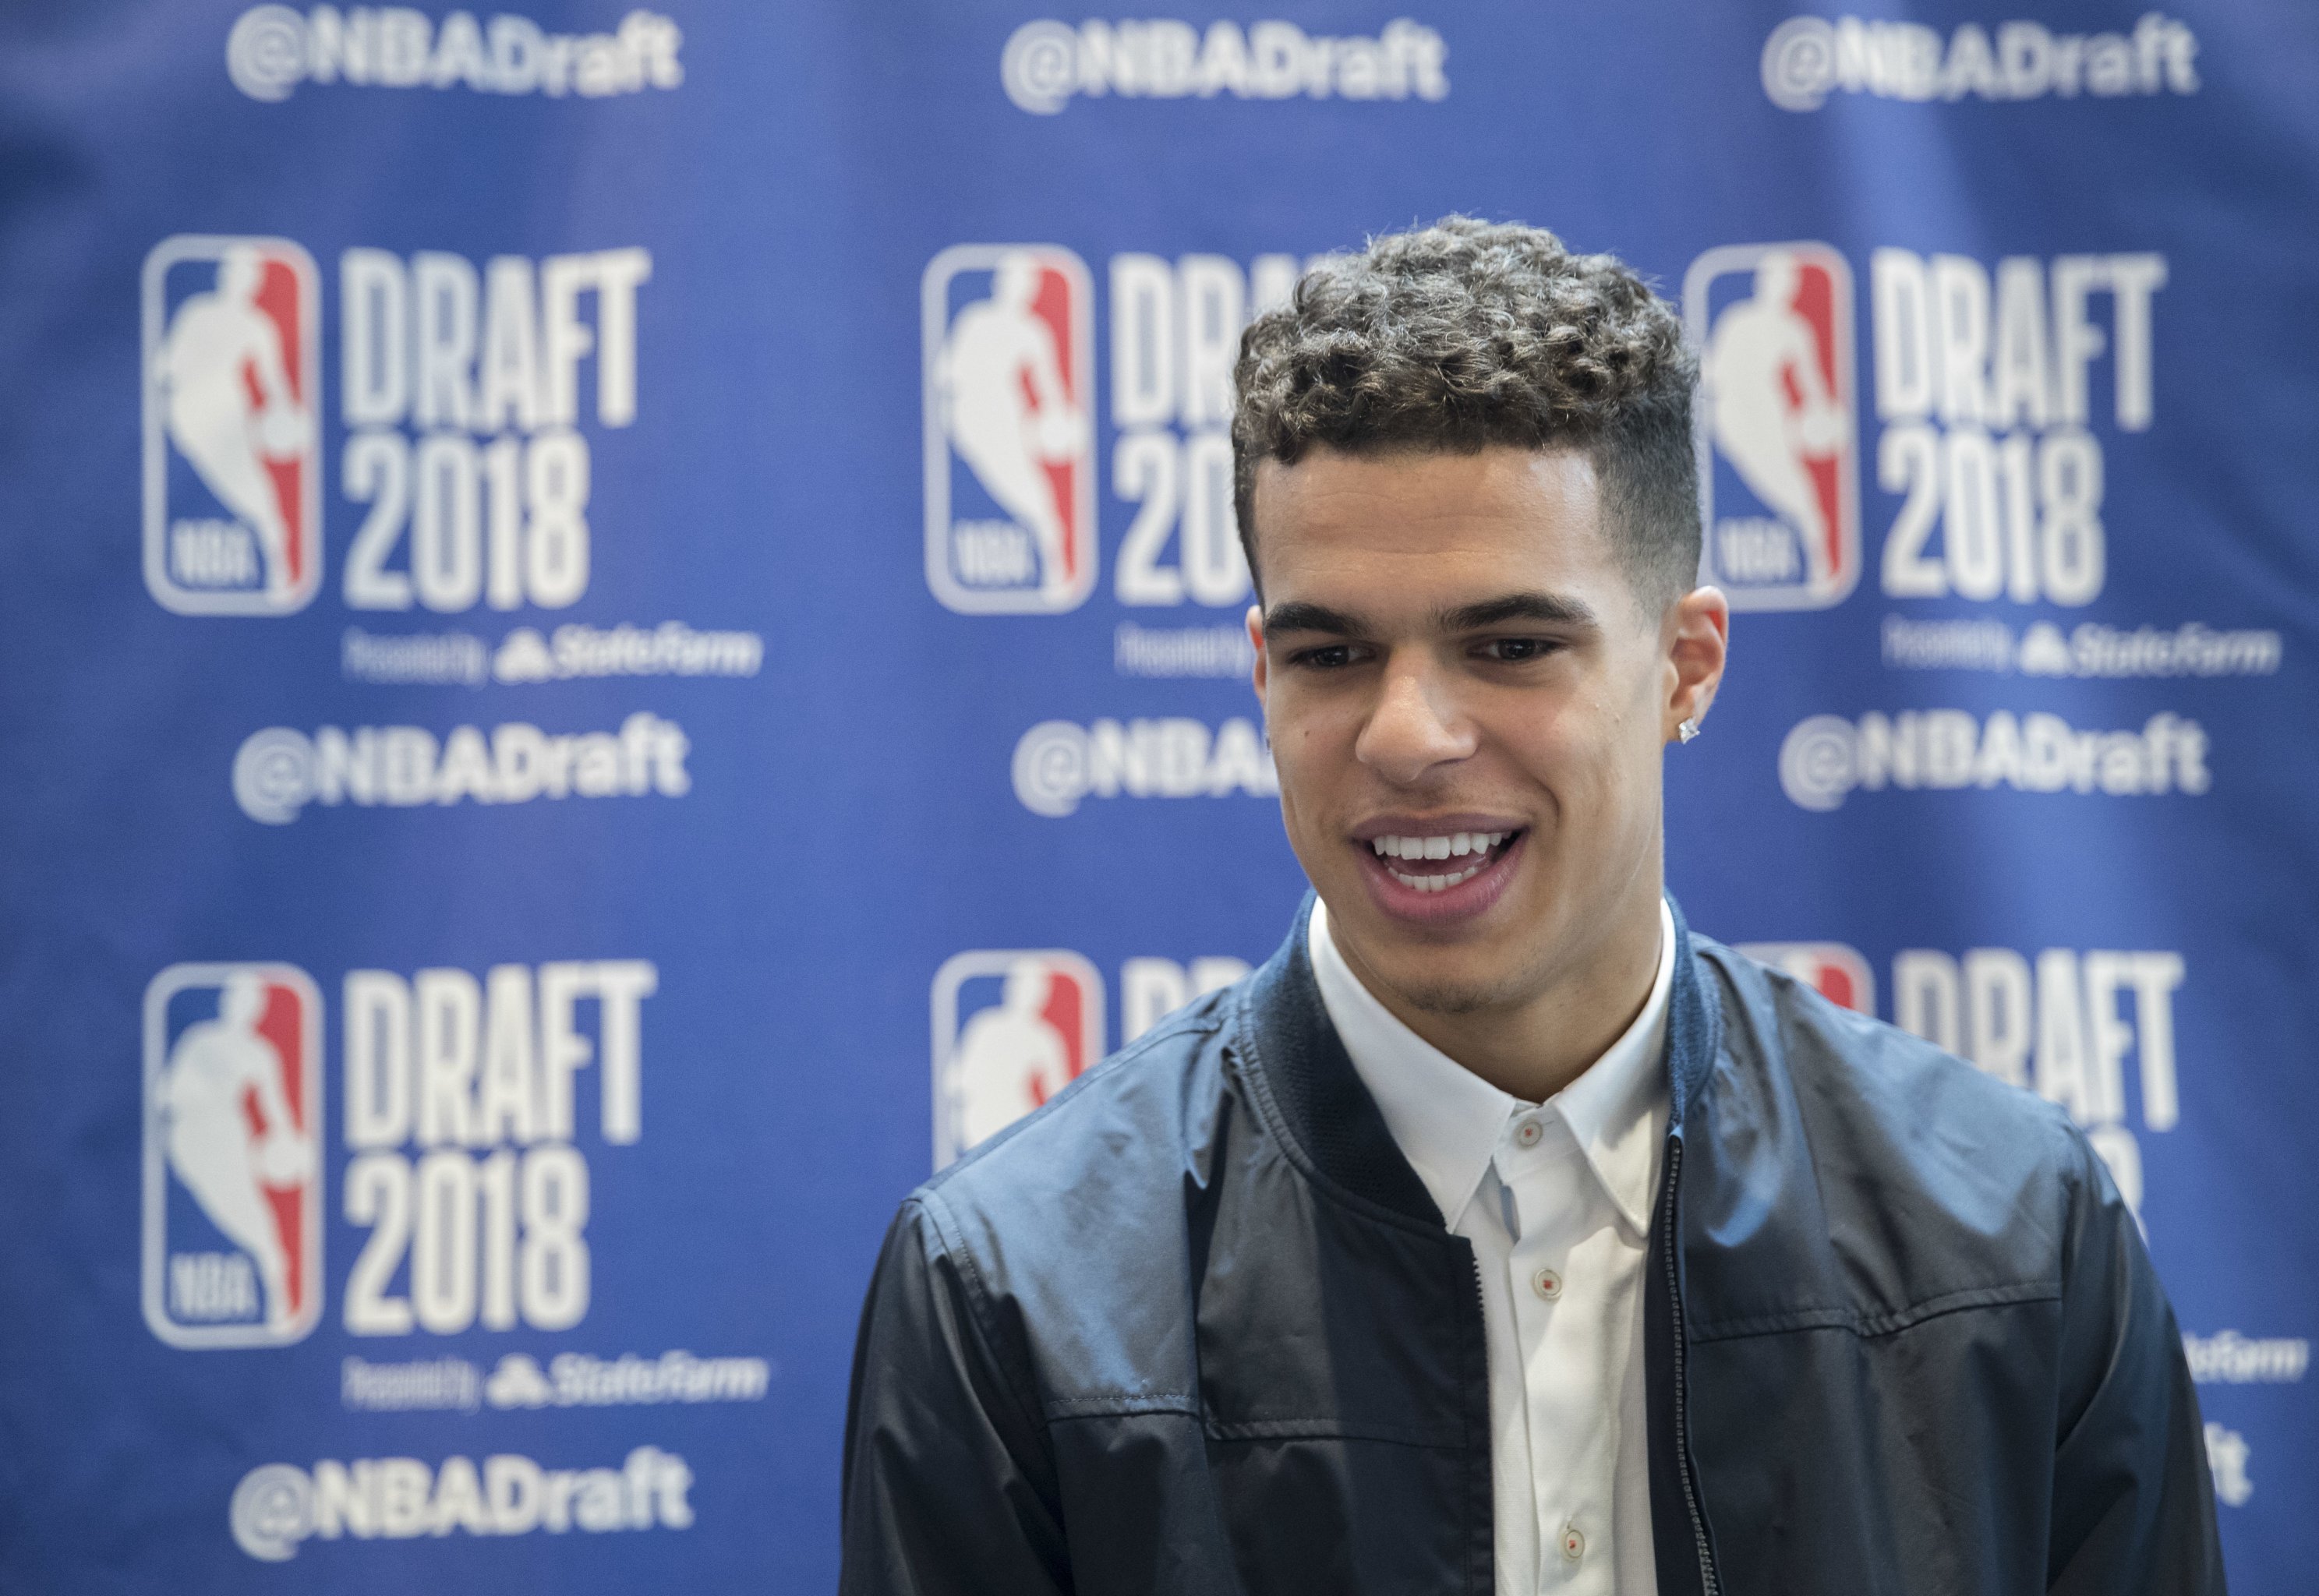 NBA Draft 2018: Rookie Portraits - Sports Illustrated